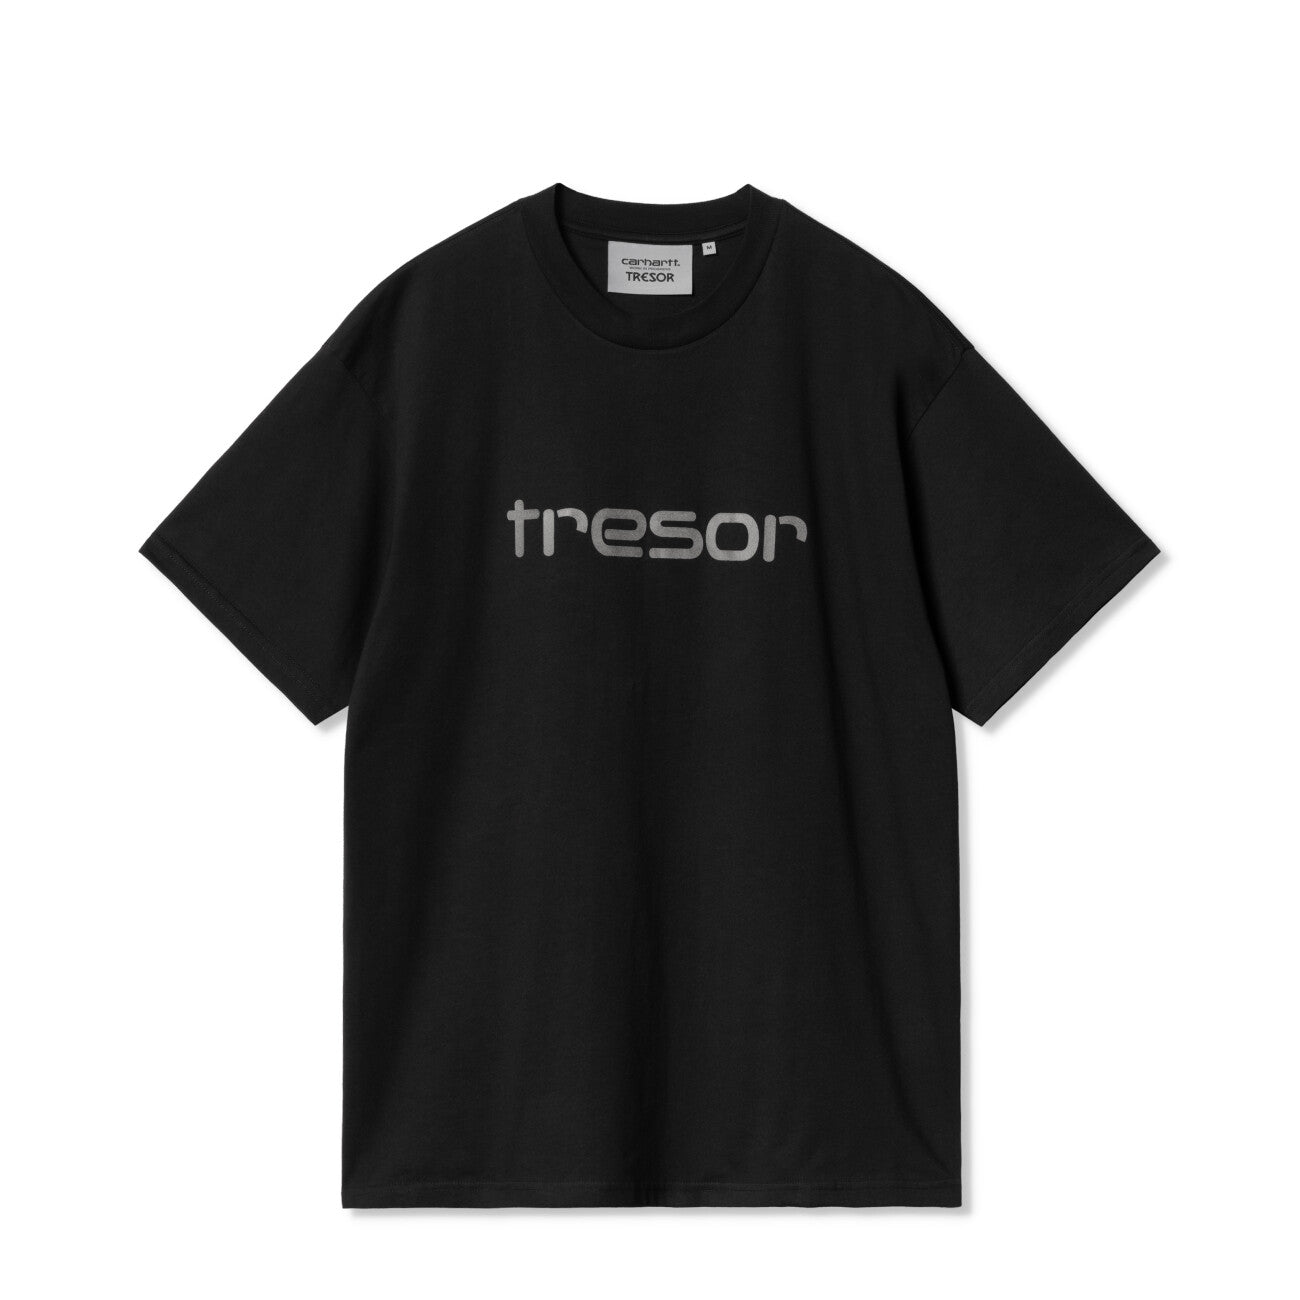 x Tresor Techno Alliance S/S T-Shirt